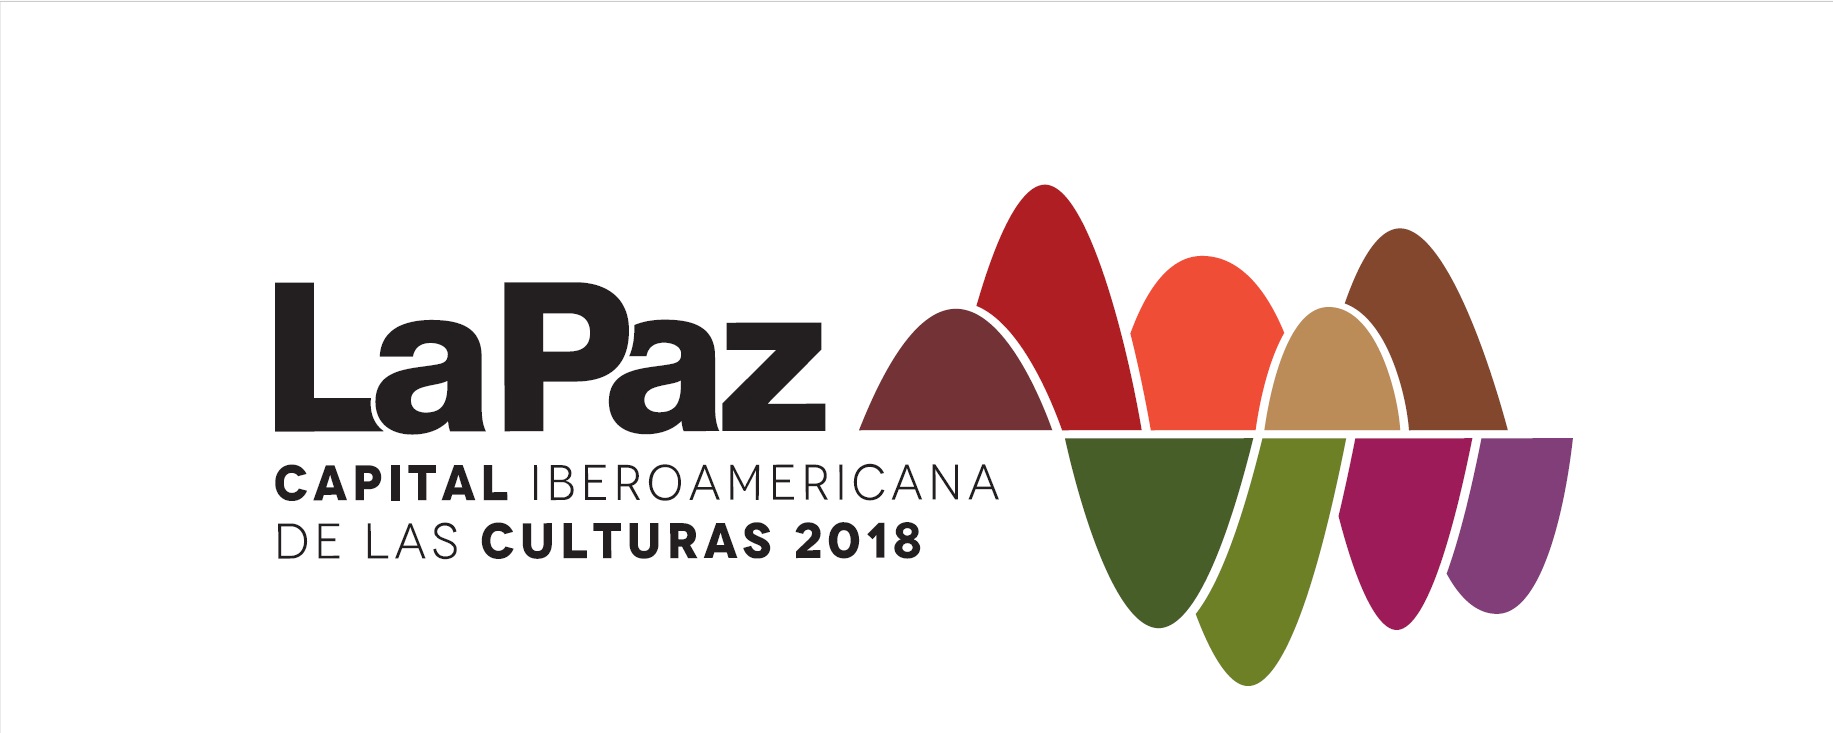 La Paz Capital Iberoamericana de las Culturas 2018